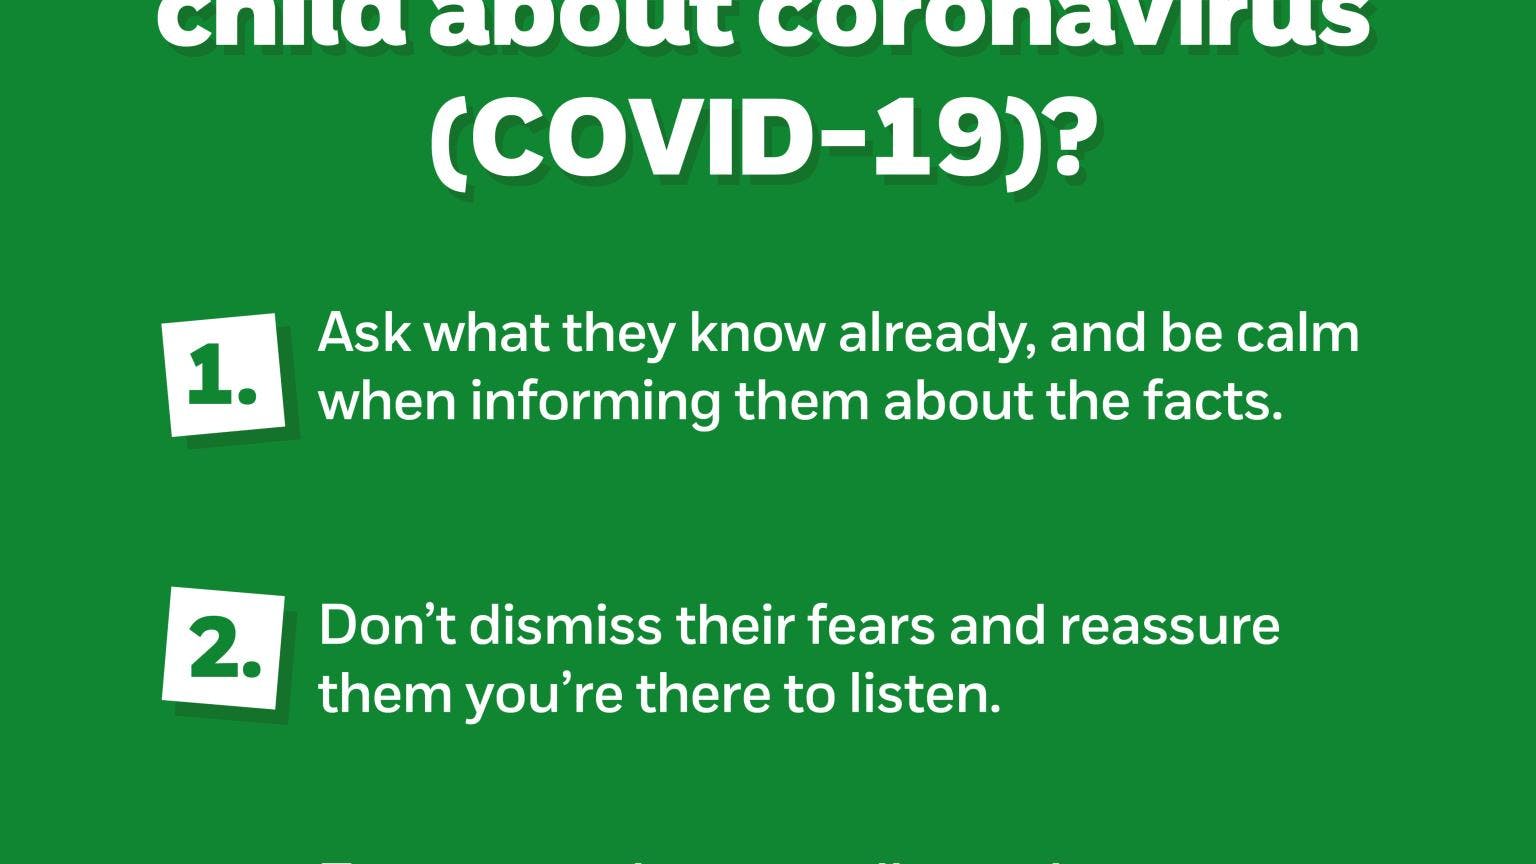 Advice for Helping Children During the Coronavirus Pandemic